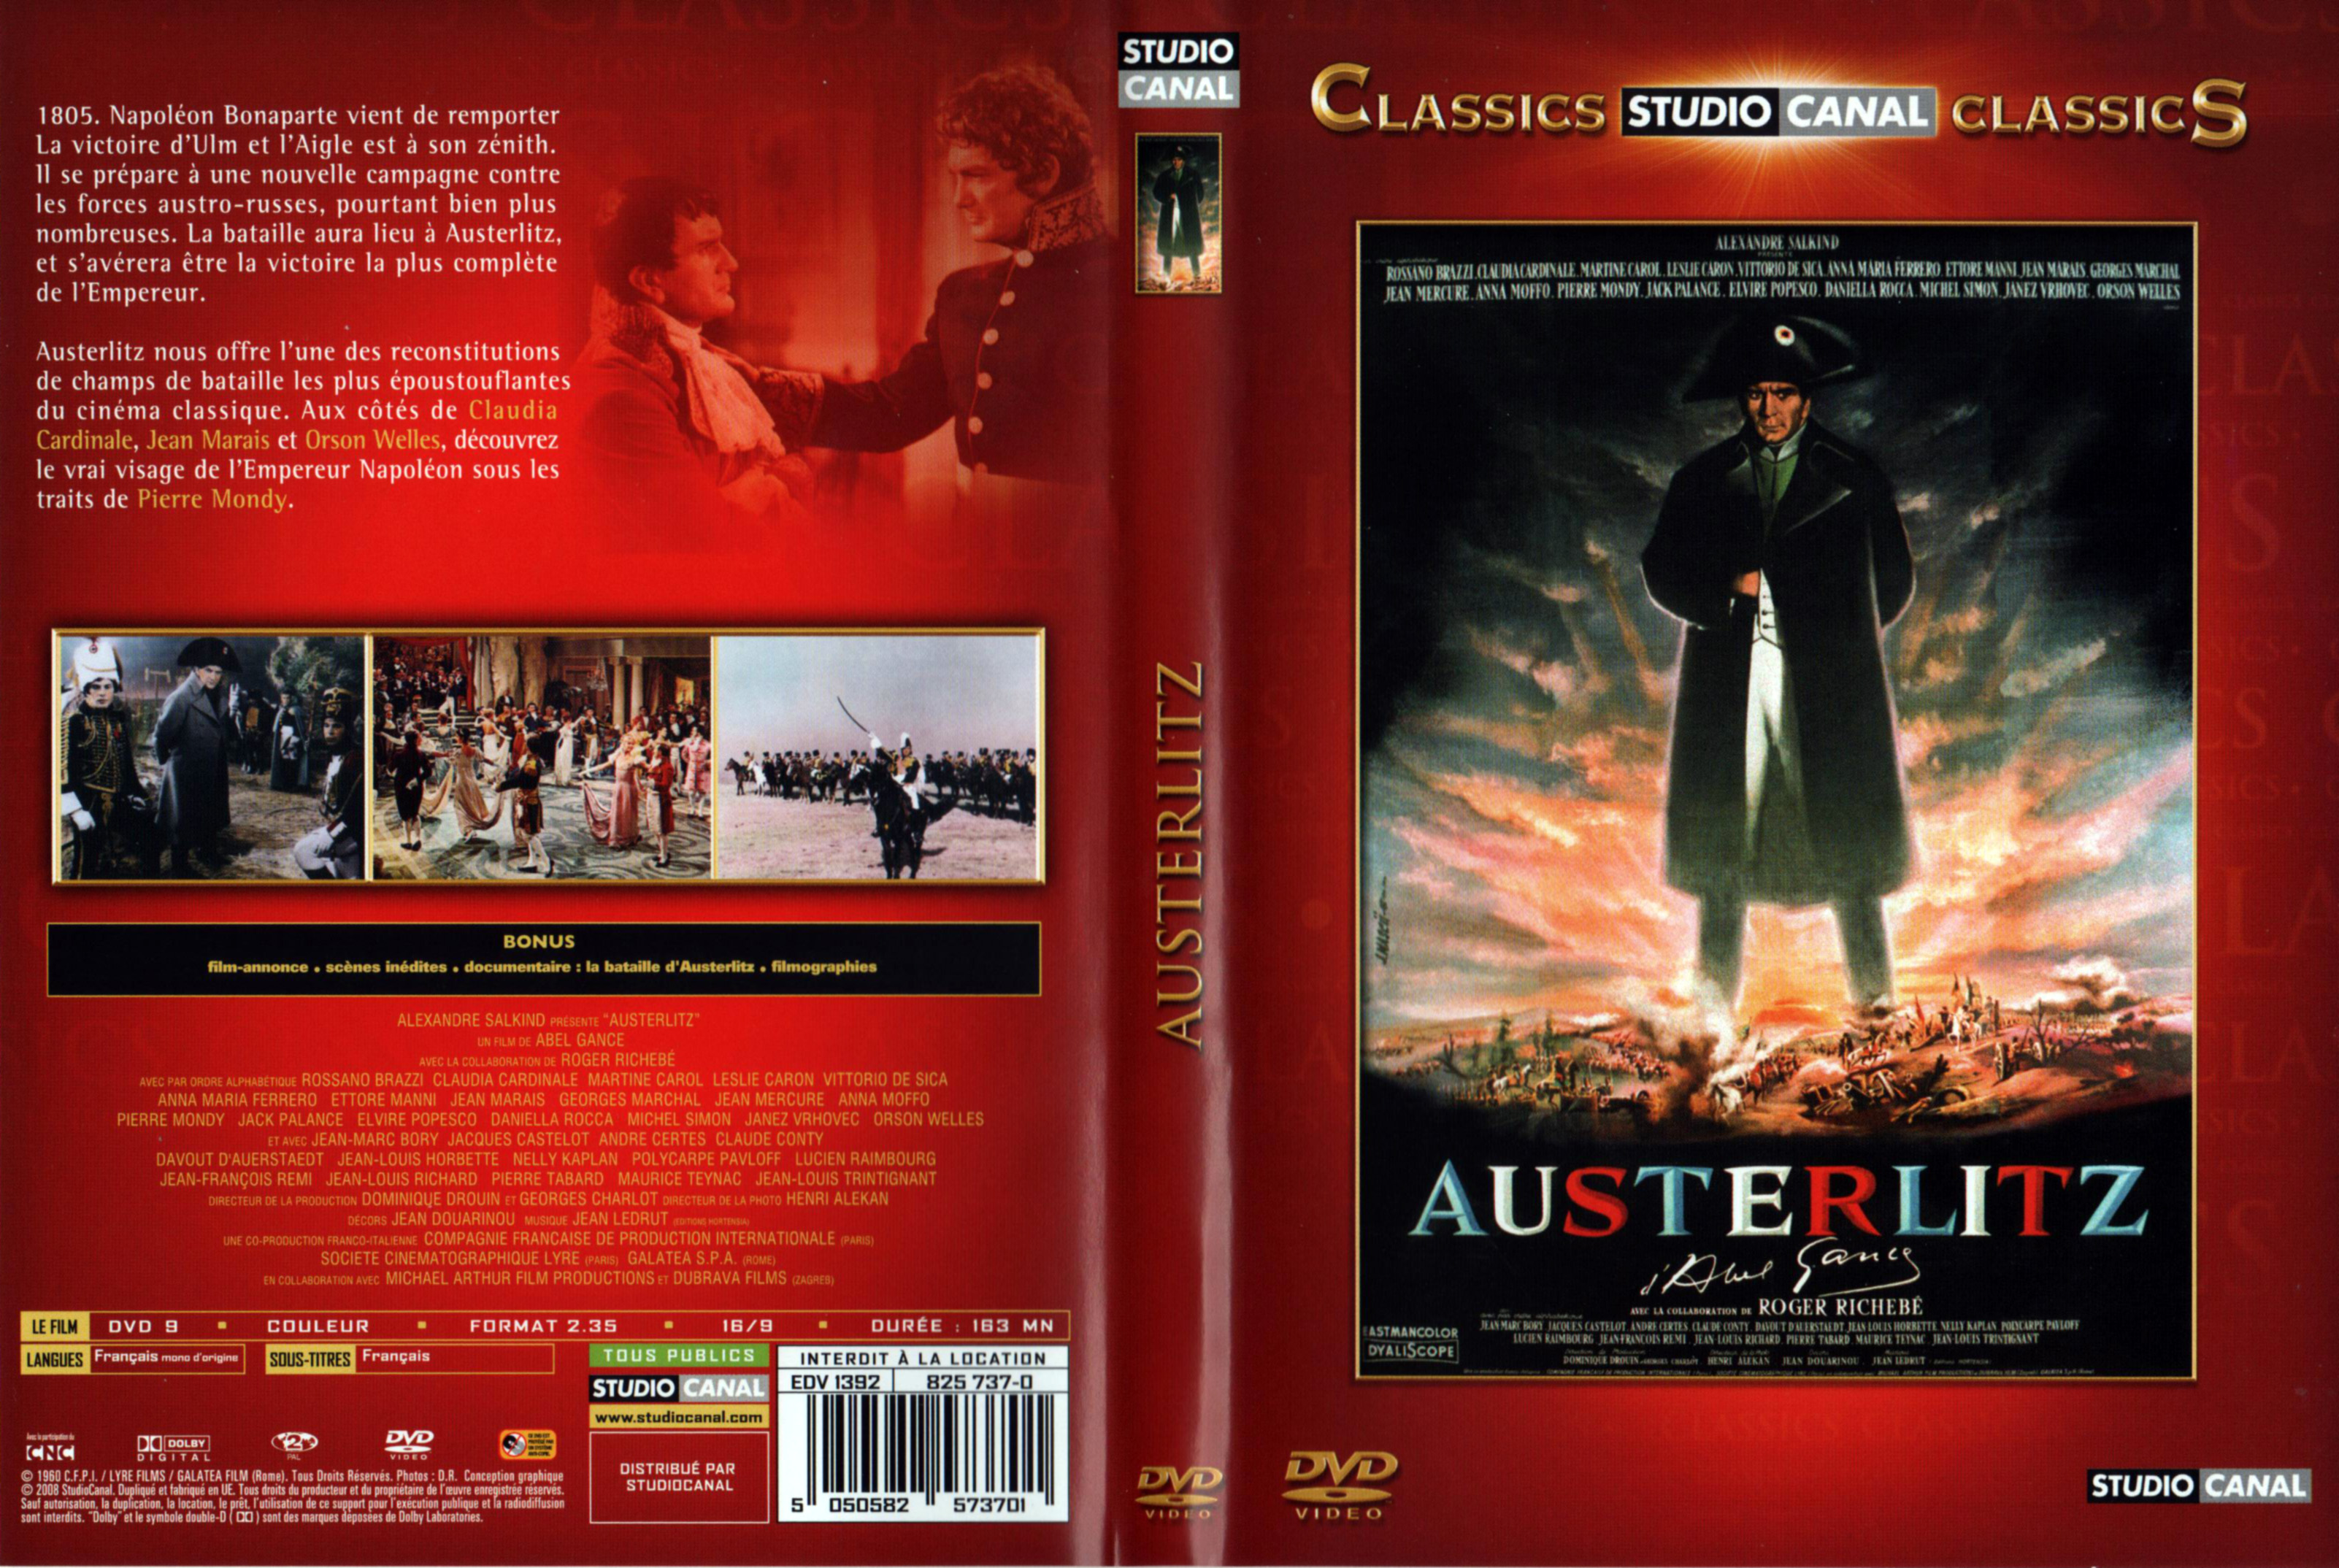 Jaquette DVD Austerlitz